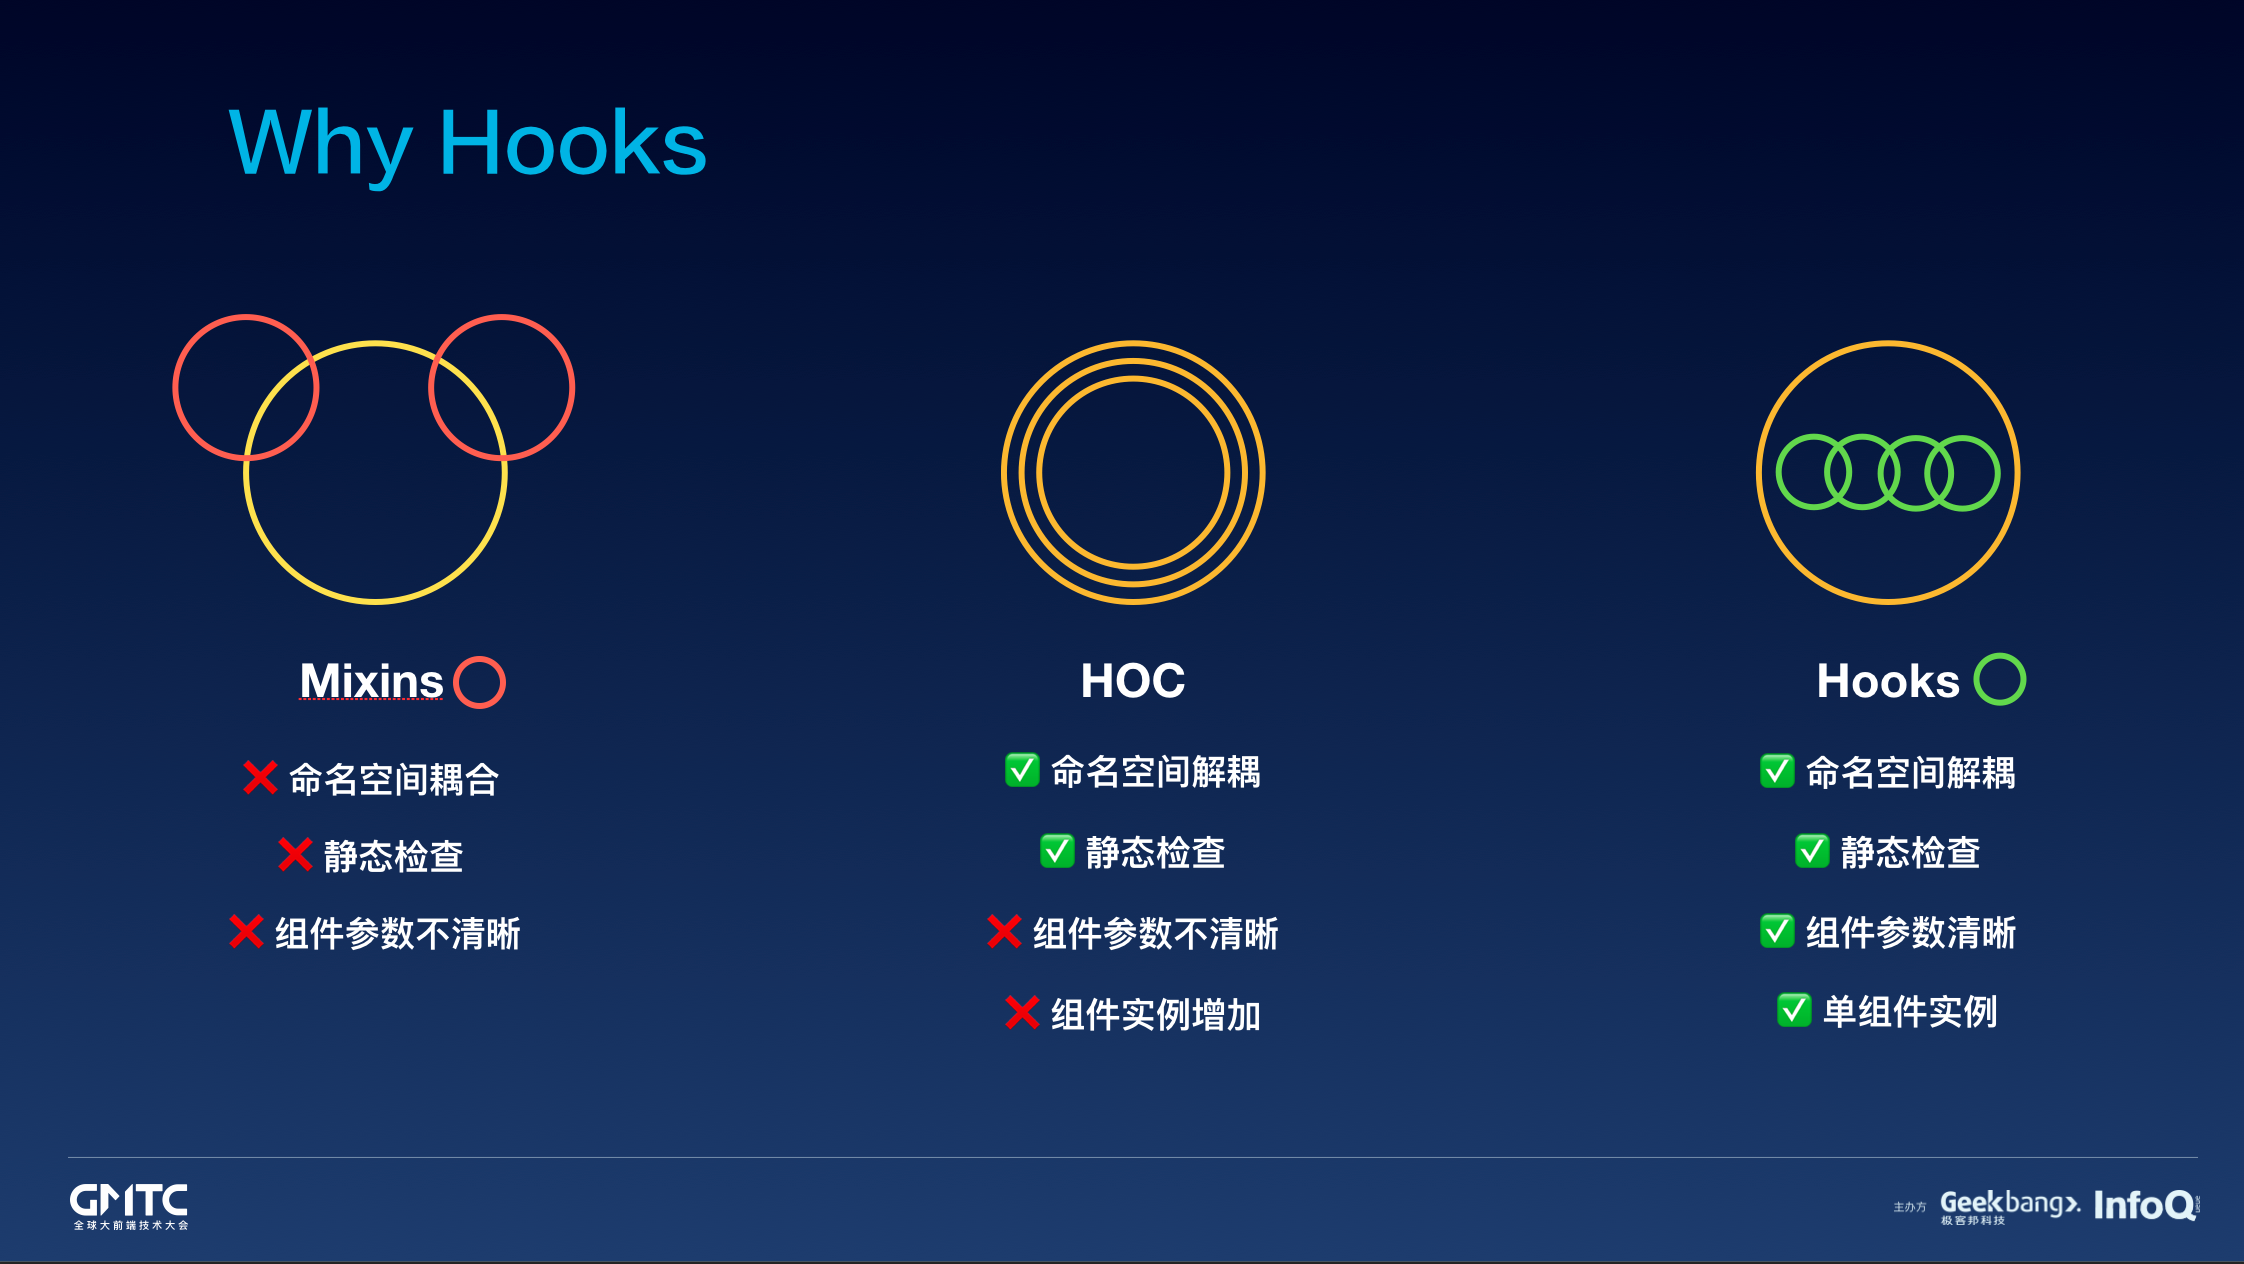 VueConf China 2019 - Why Hooks